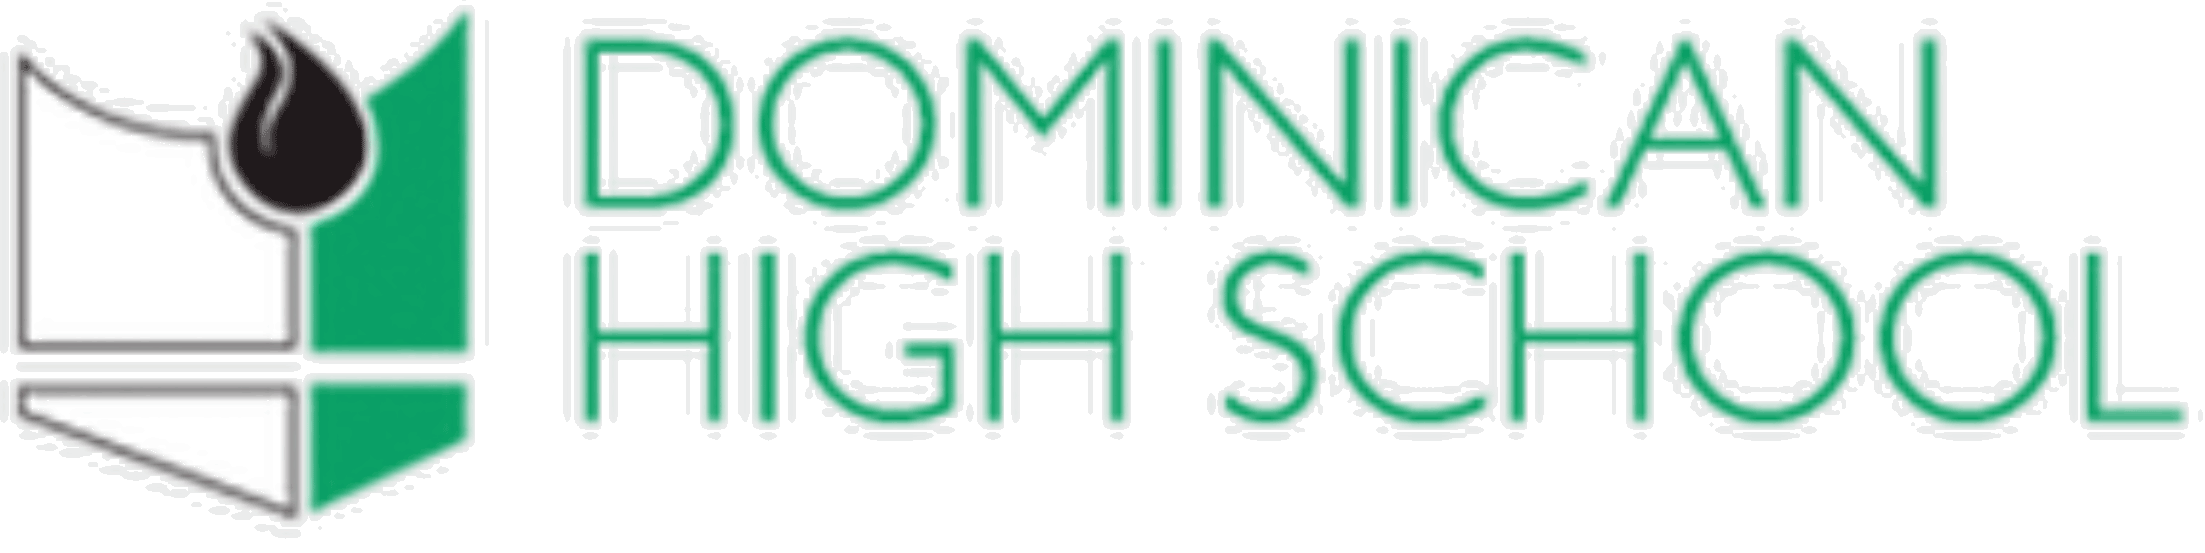 Dominican High School logo